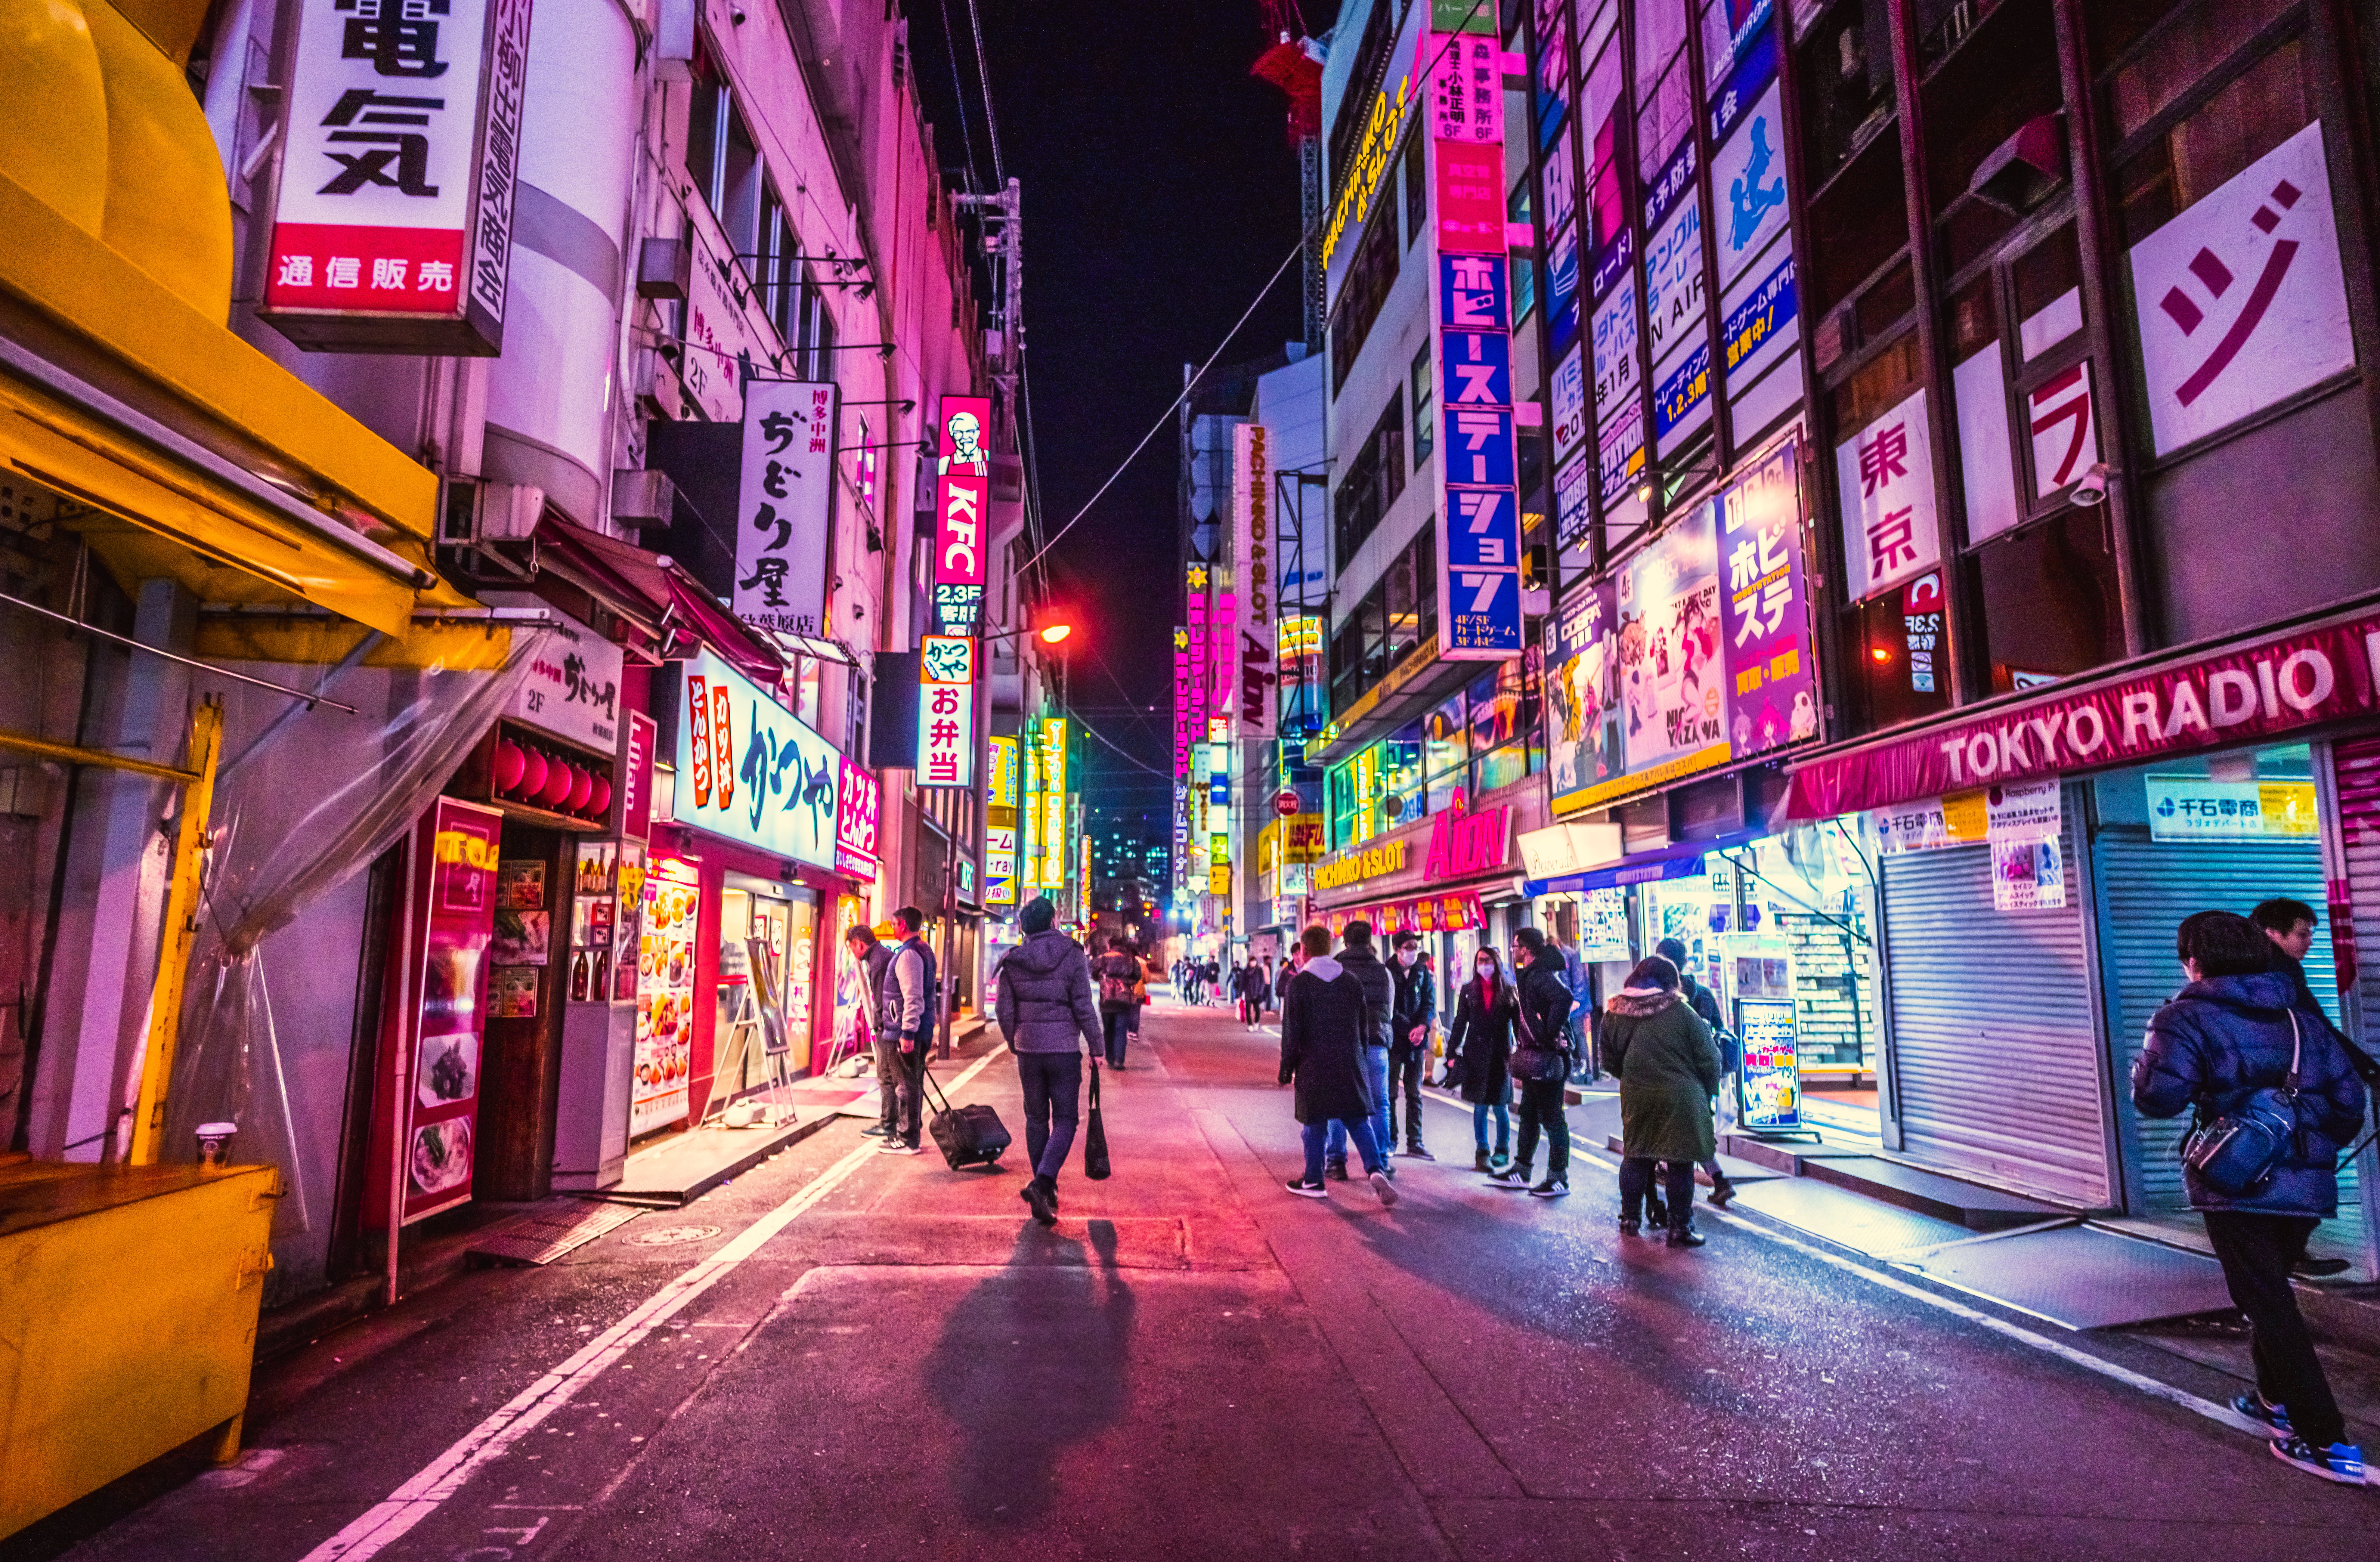 A busy urban street scene from Tokyo, Japan